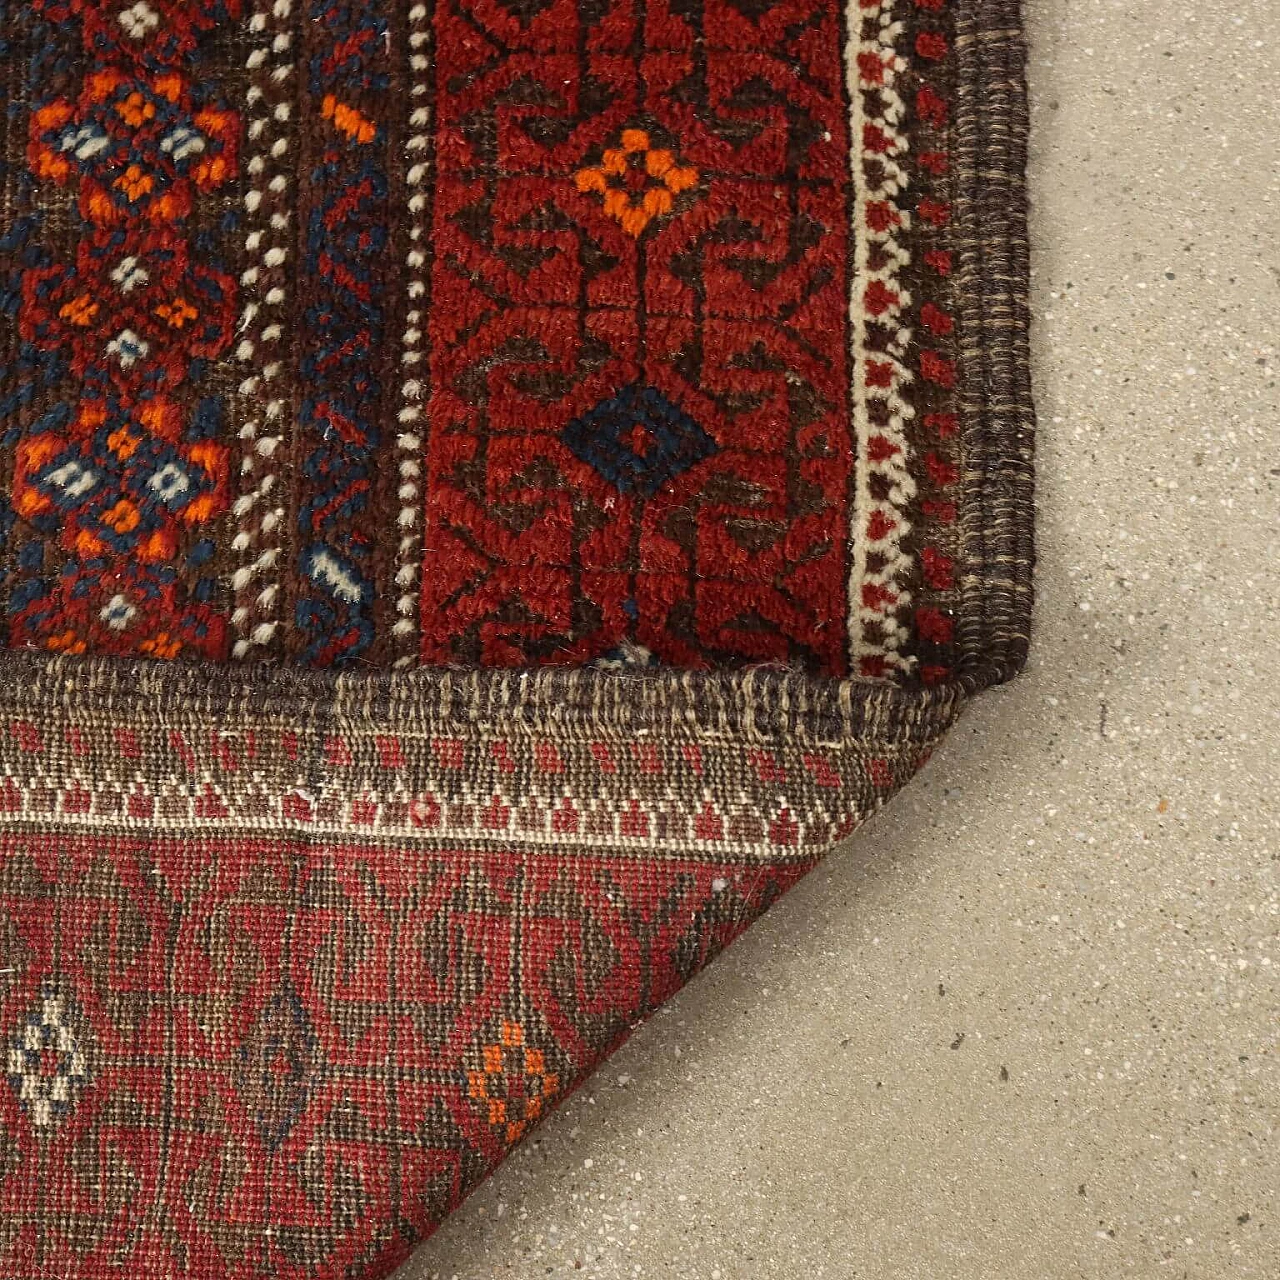 Iranian red, blue and orange wool Beluchi rug 8